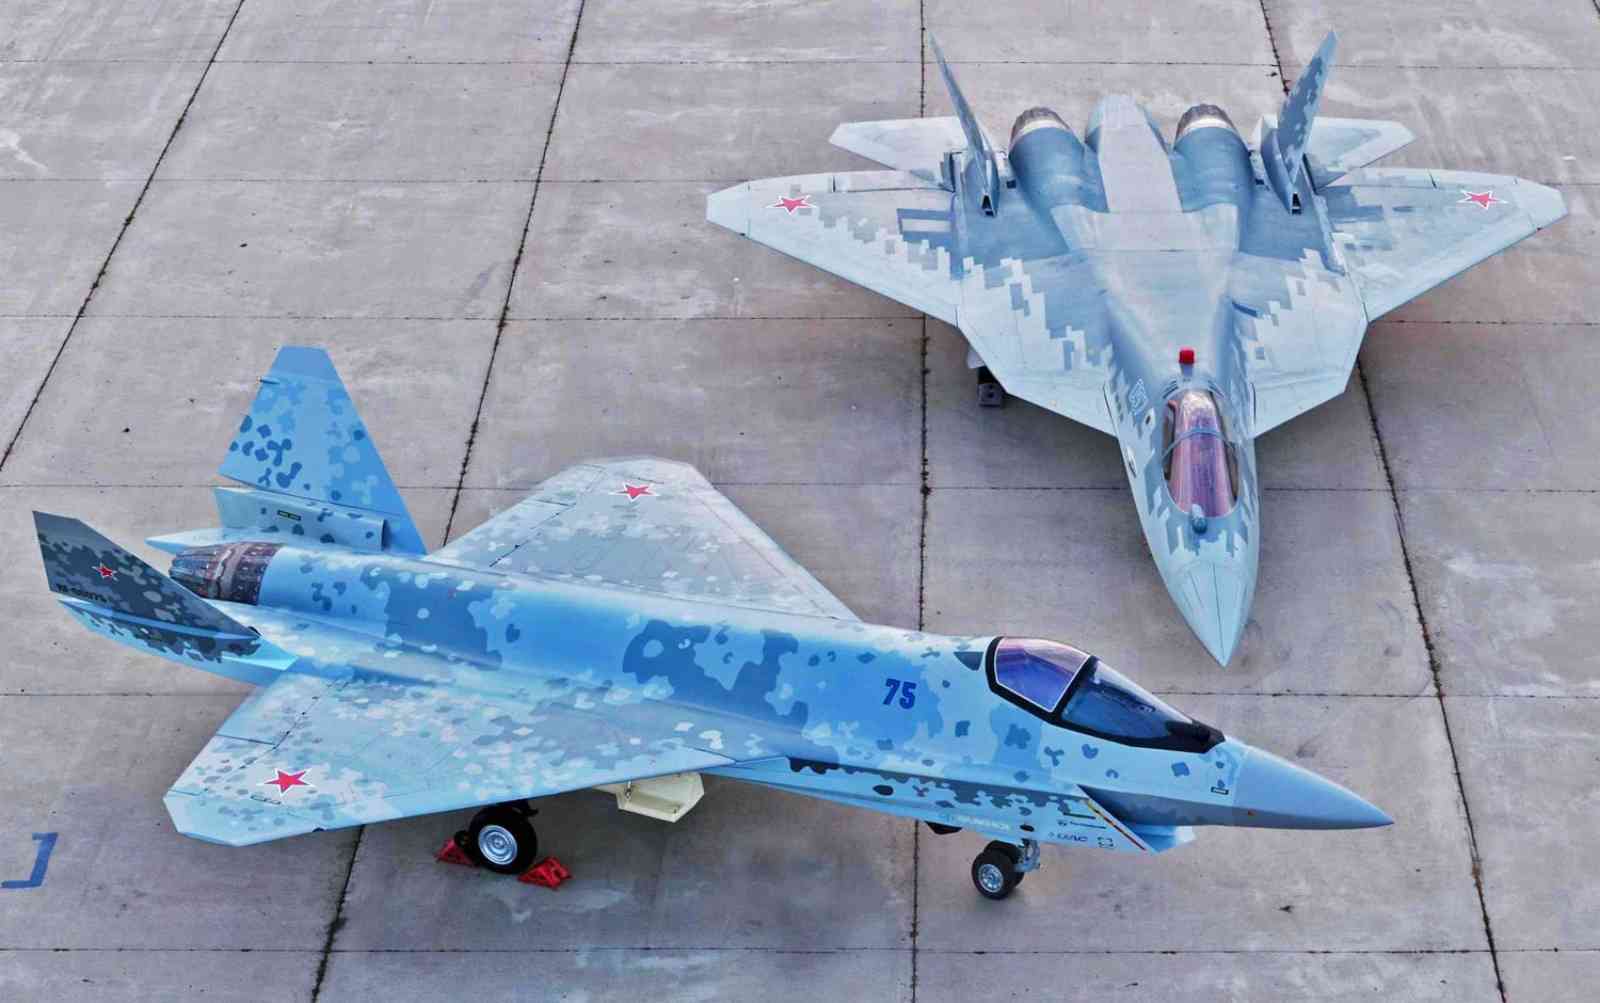 طائرات su-57 و su-75